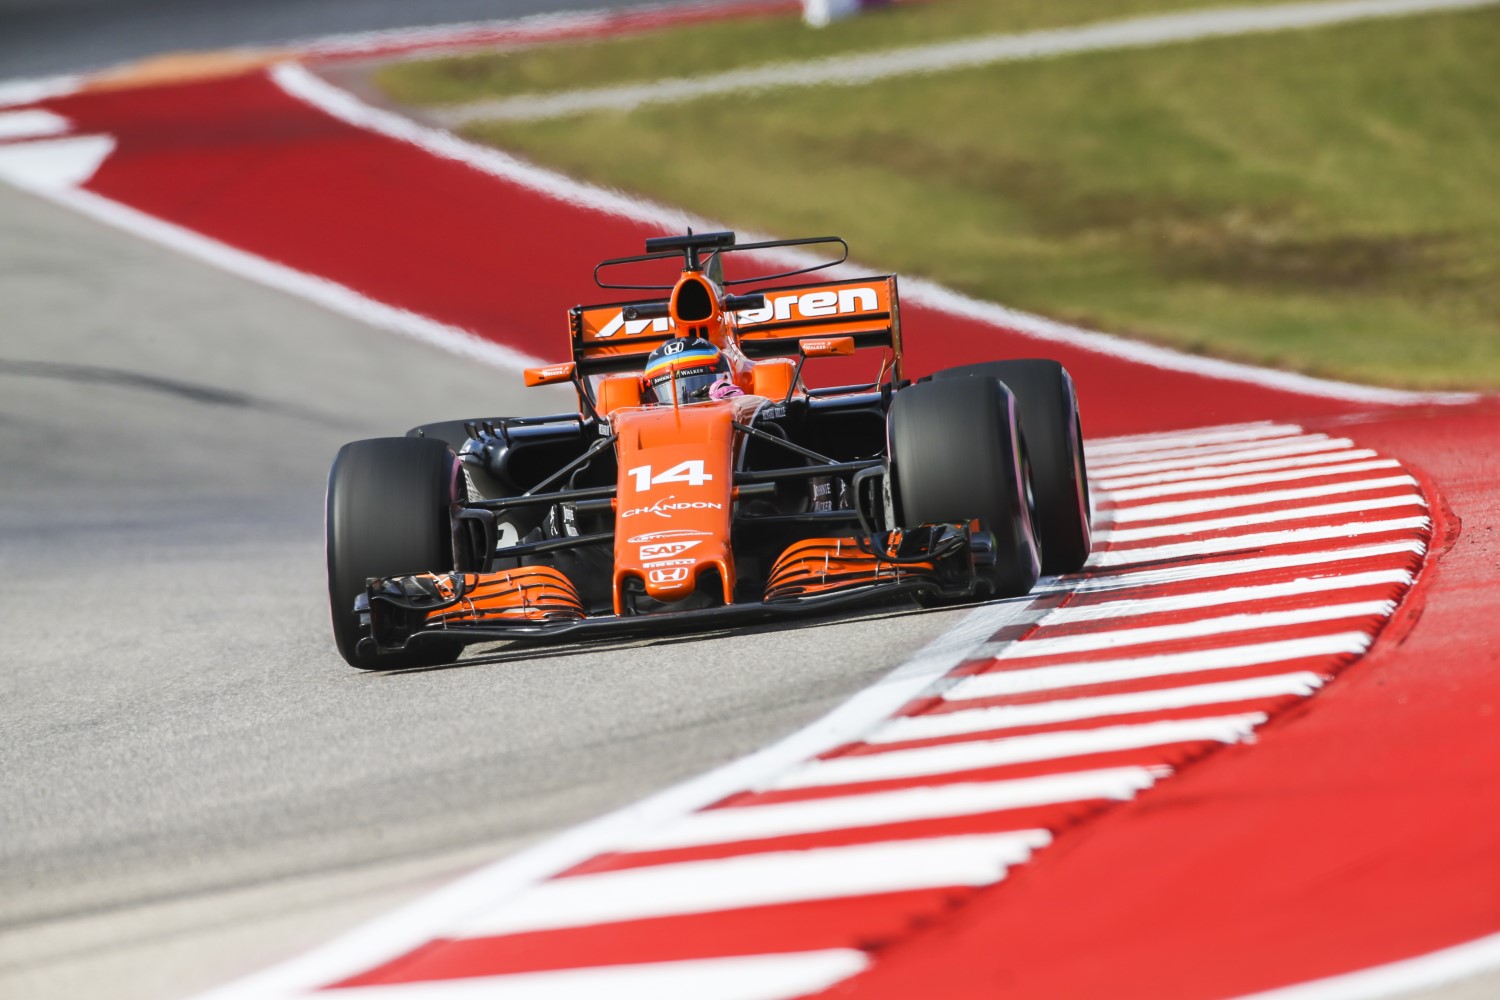 Can the McLaren surprise in 2018?